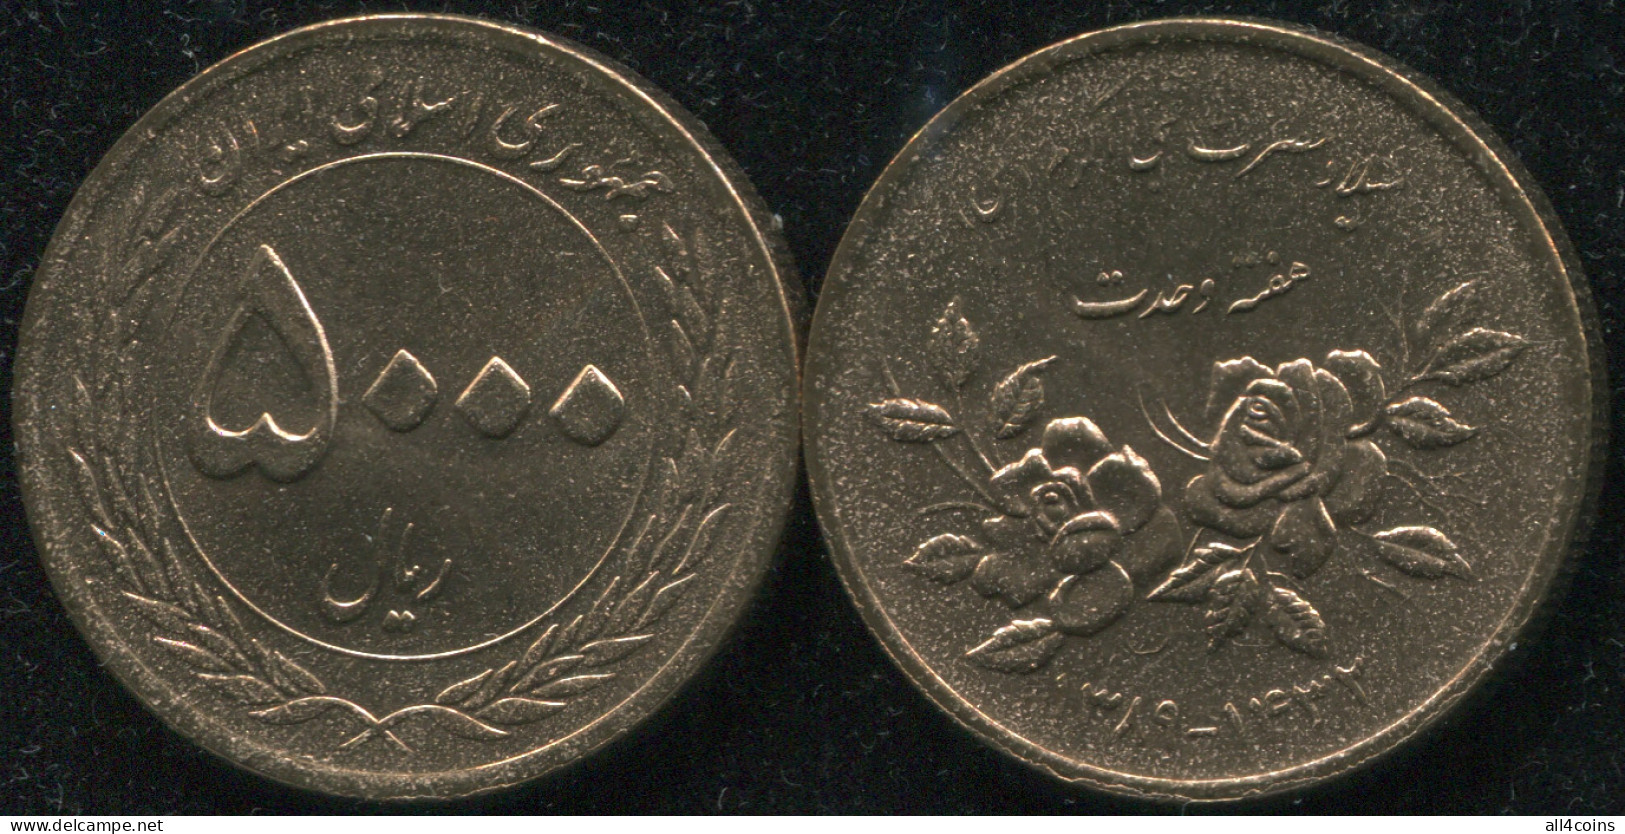 Persia 5000 Rials. 2010 (Coin KM#1280. Unc) Muslim Week - Iran